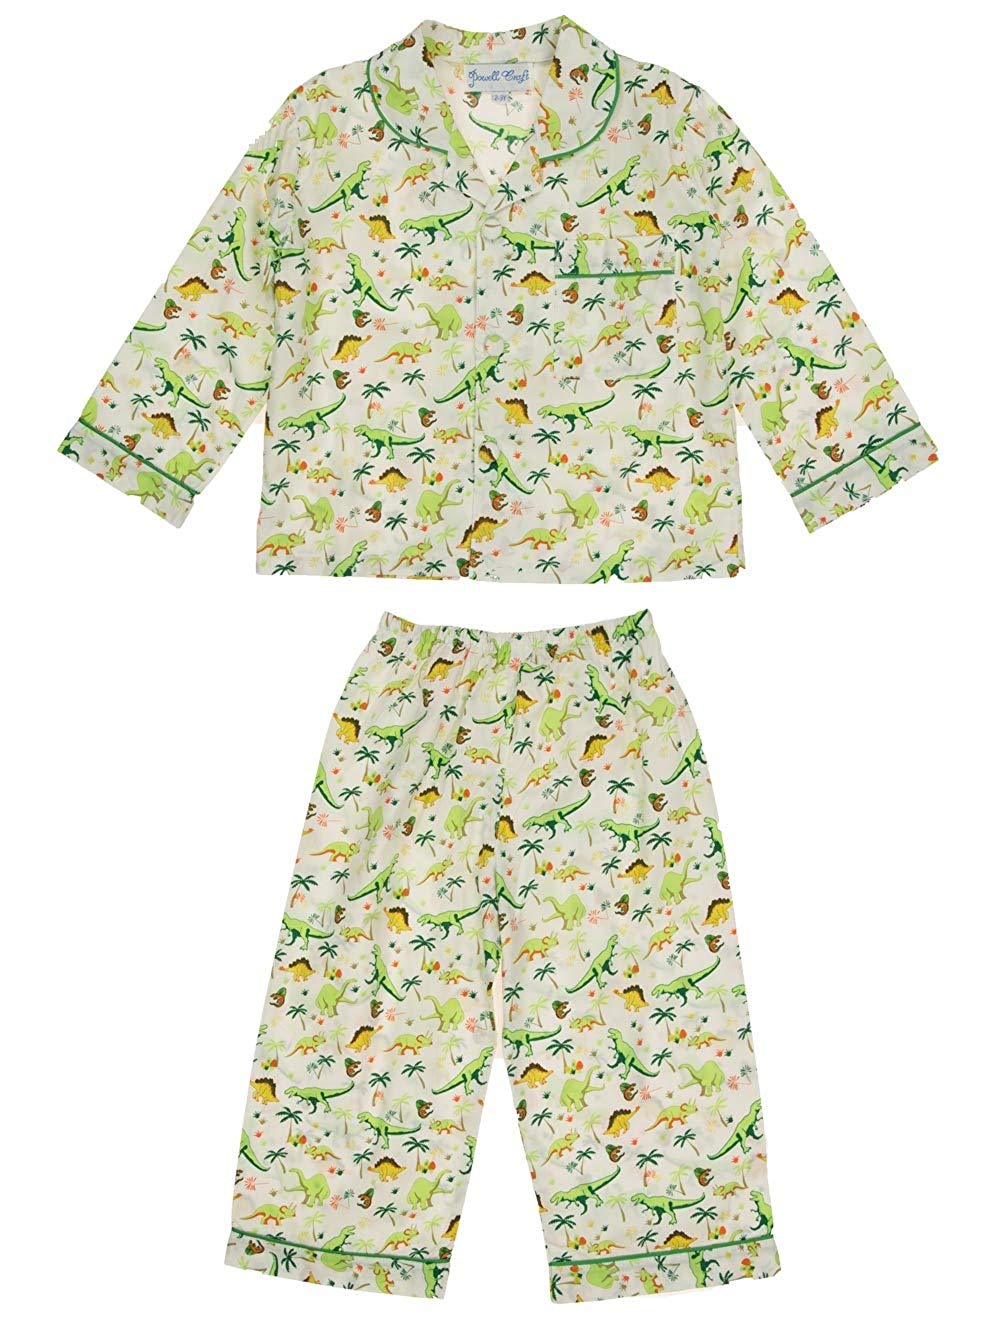 Powell craft Boys Pyjamas - Dinosaur design (4-5 years) - hanrattycraftsgifts.co.uk